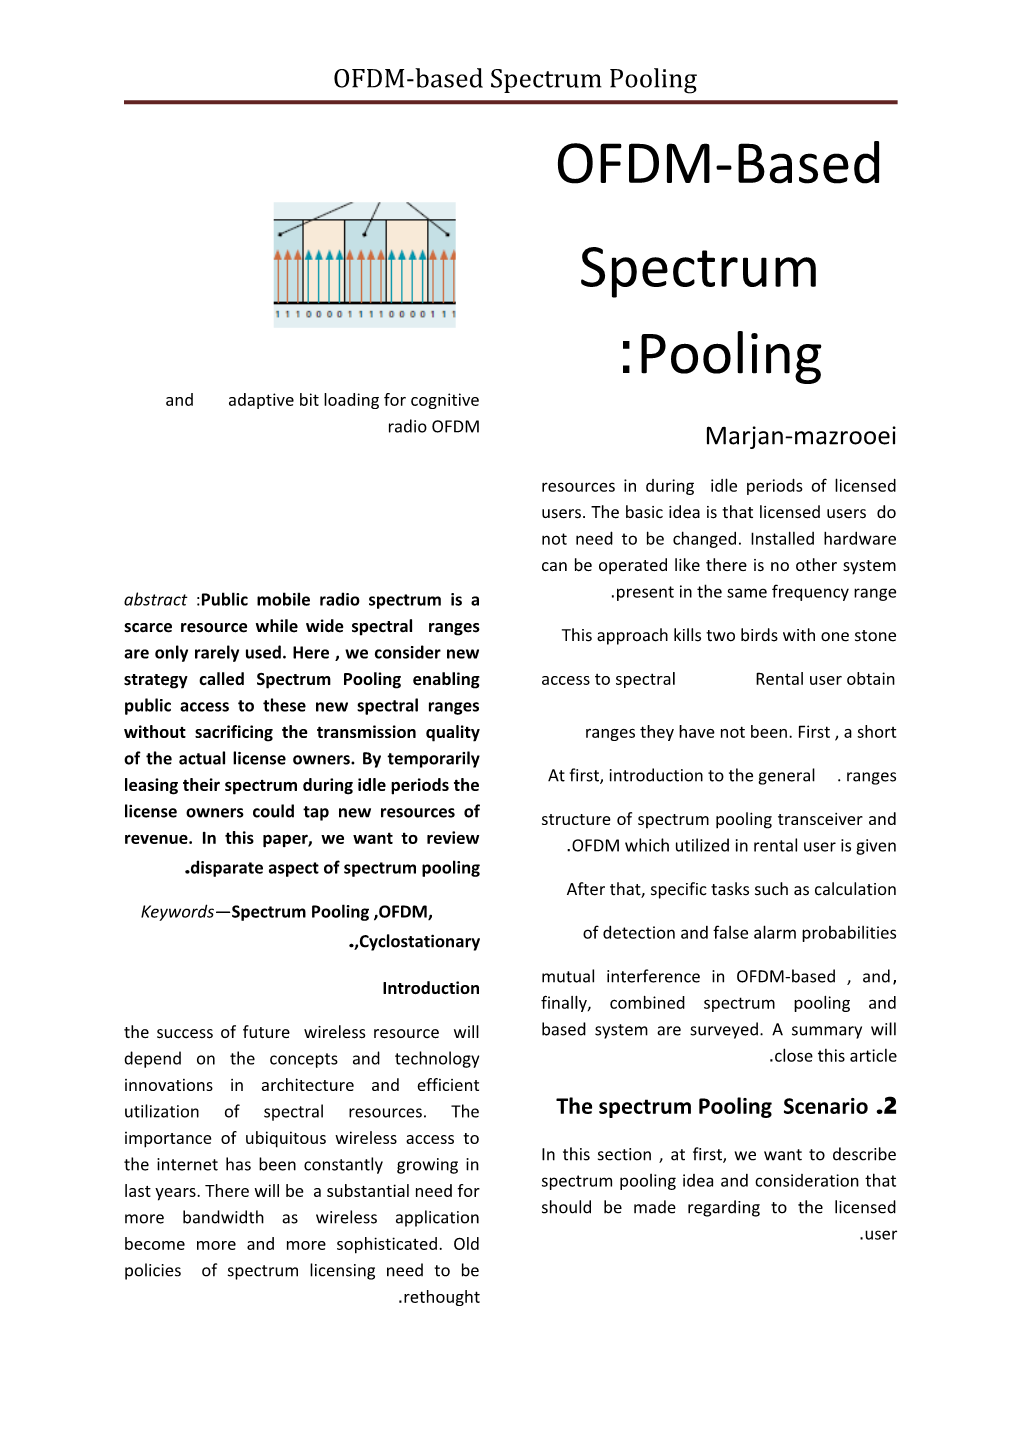 OFDM-Based Spectrum Pooling